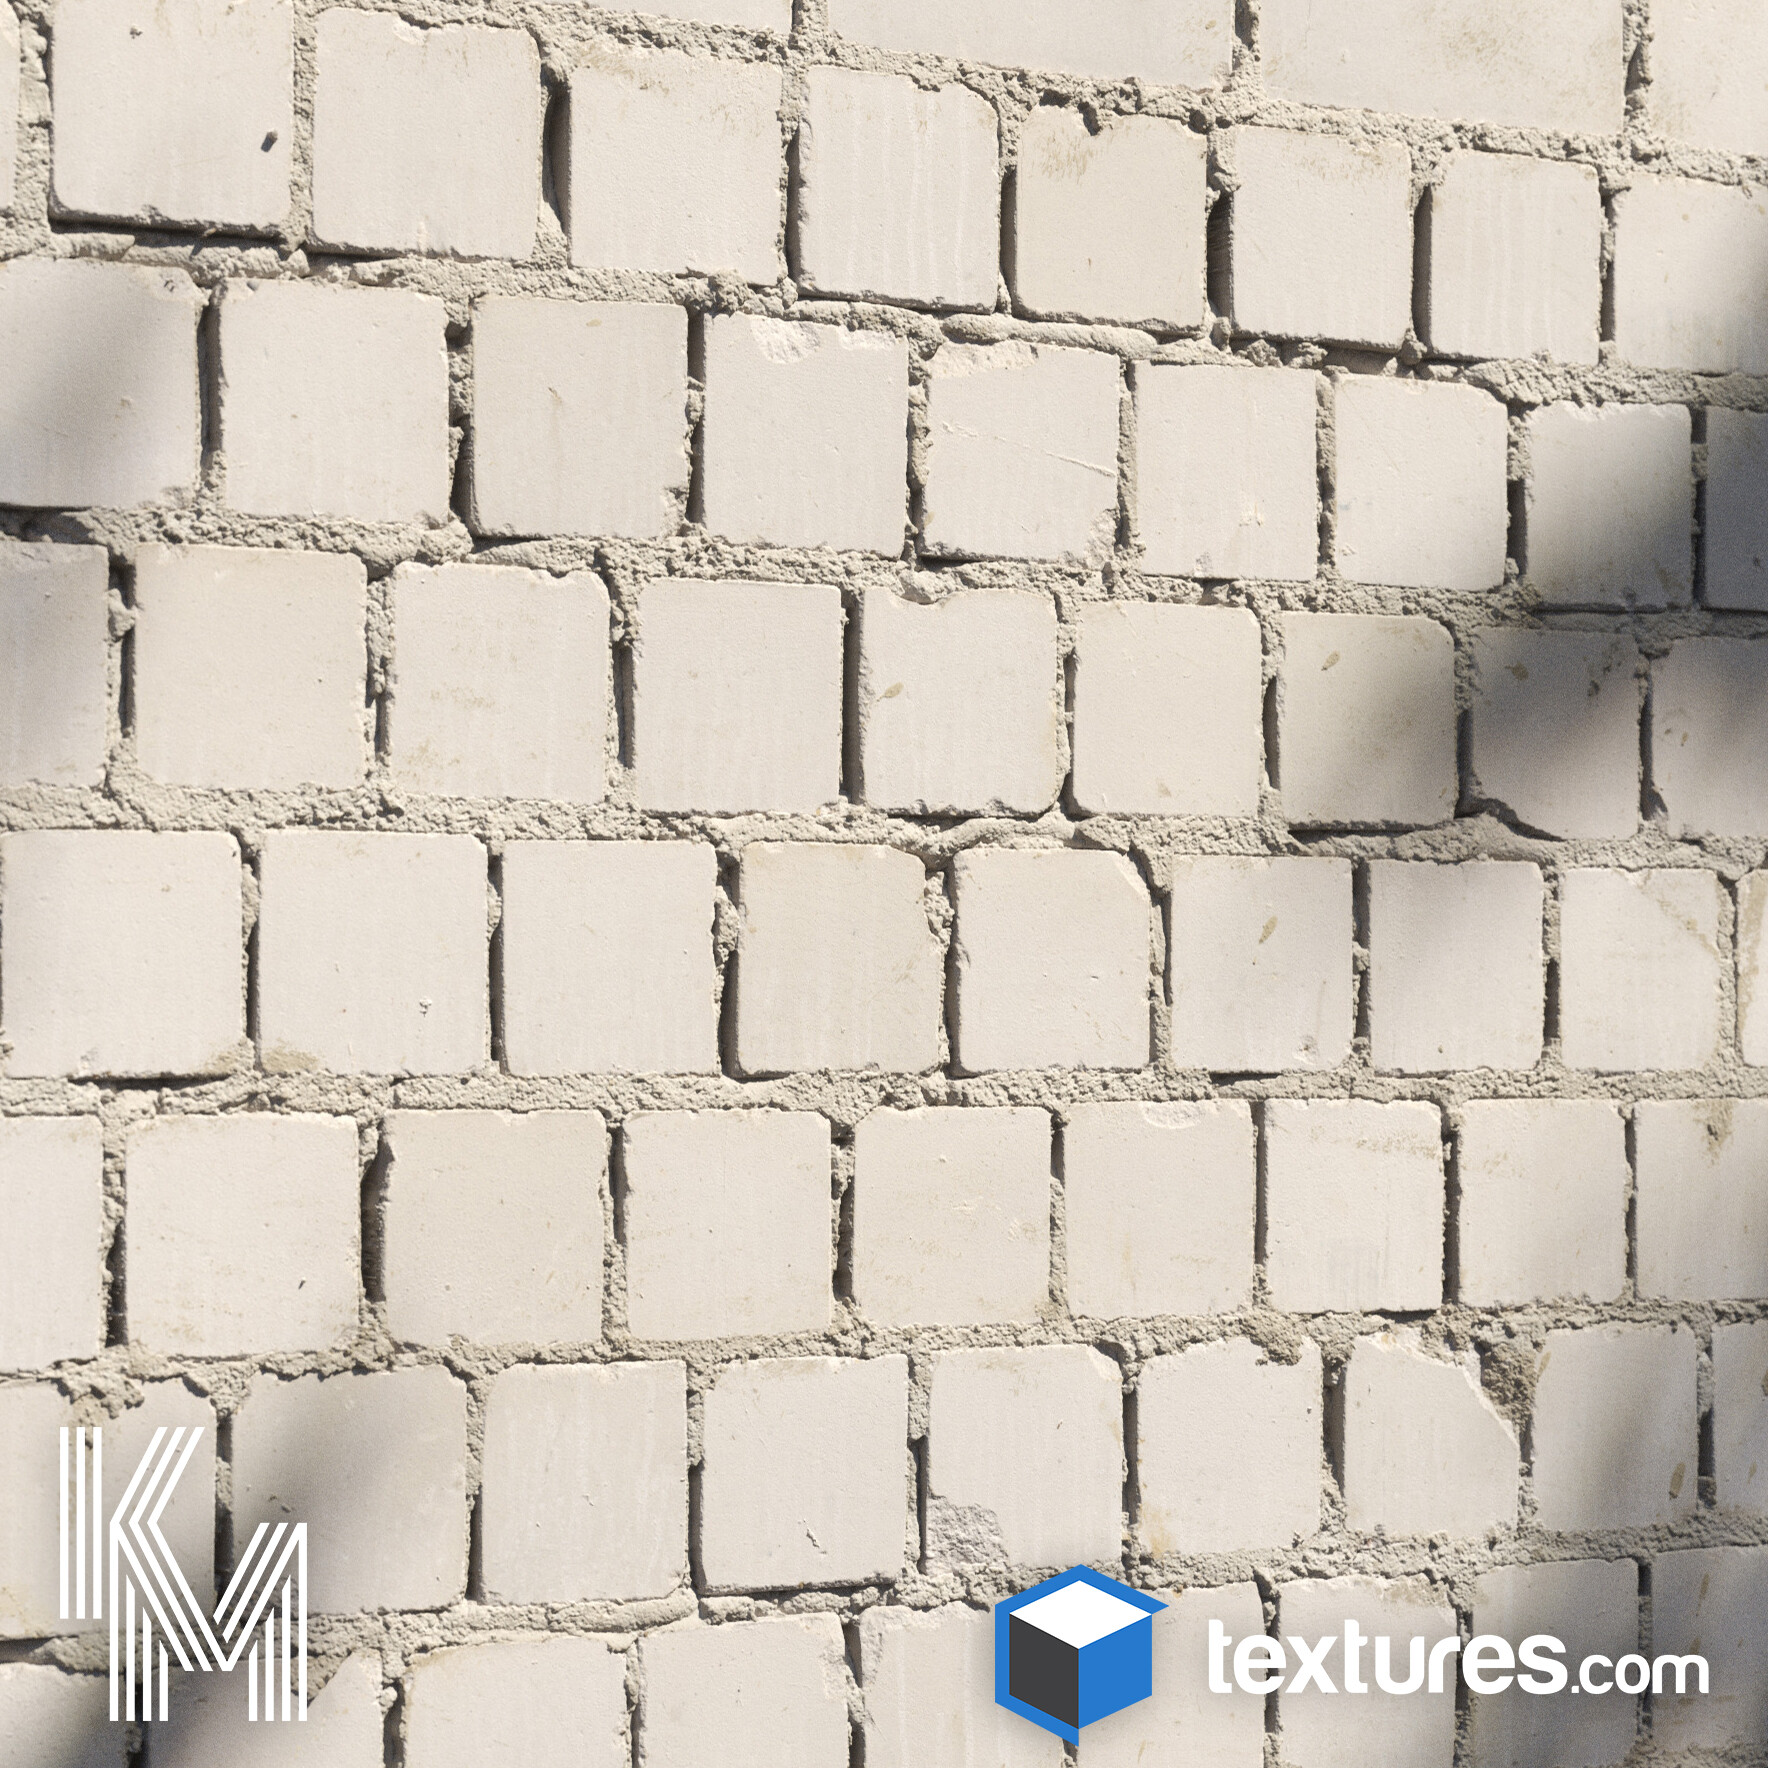 concrete block wall texture